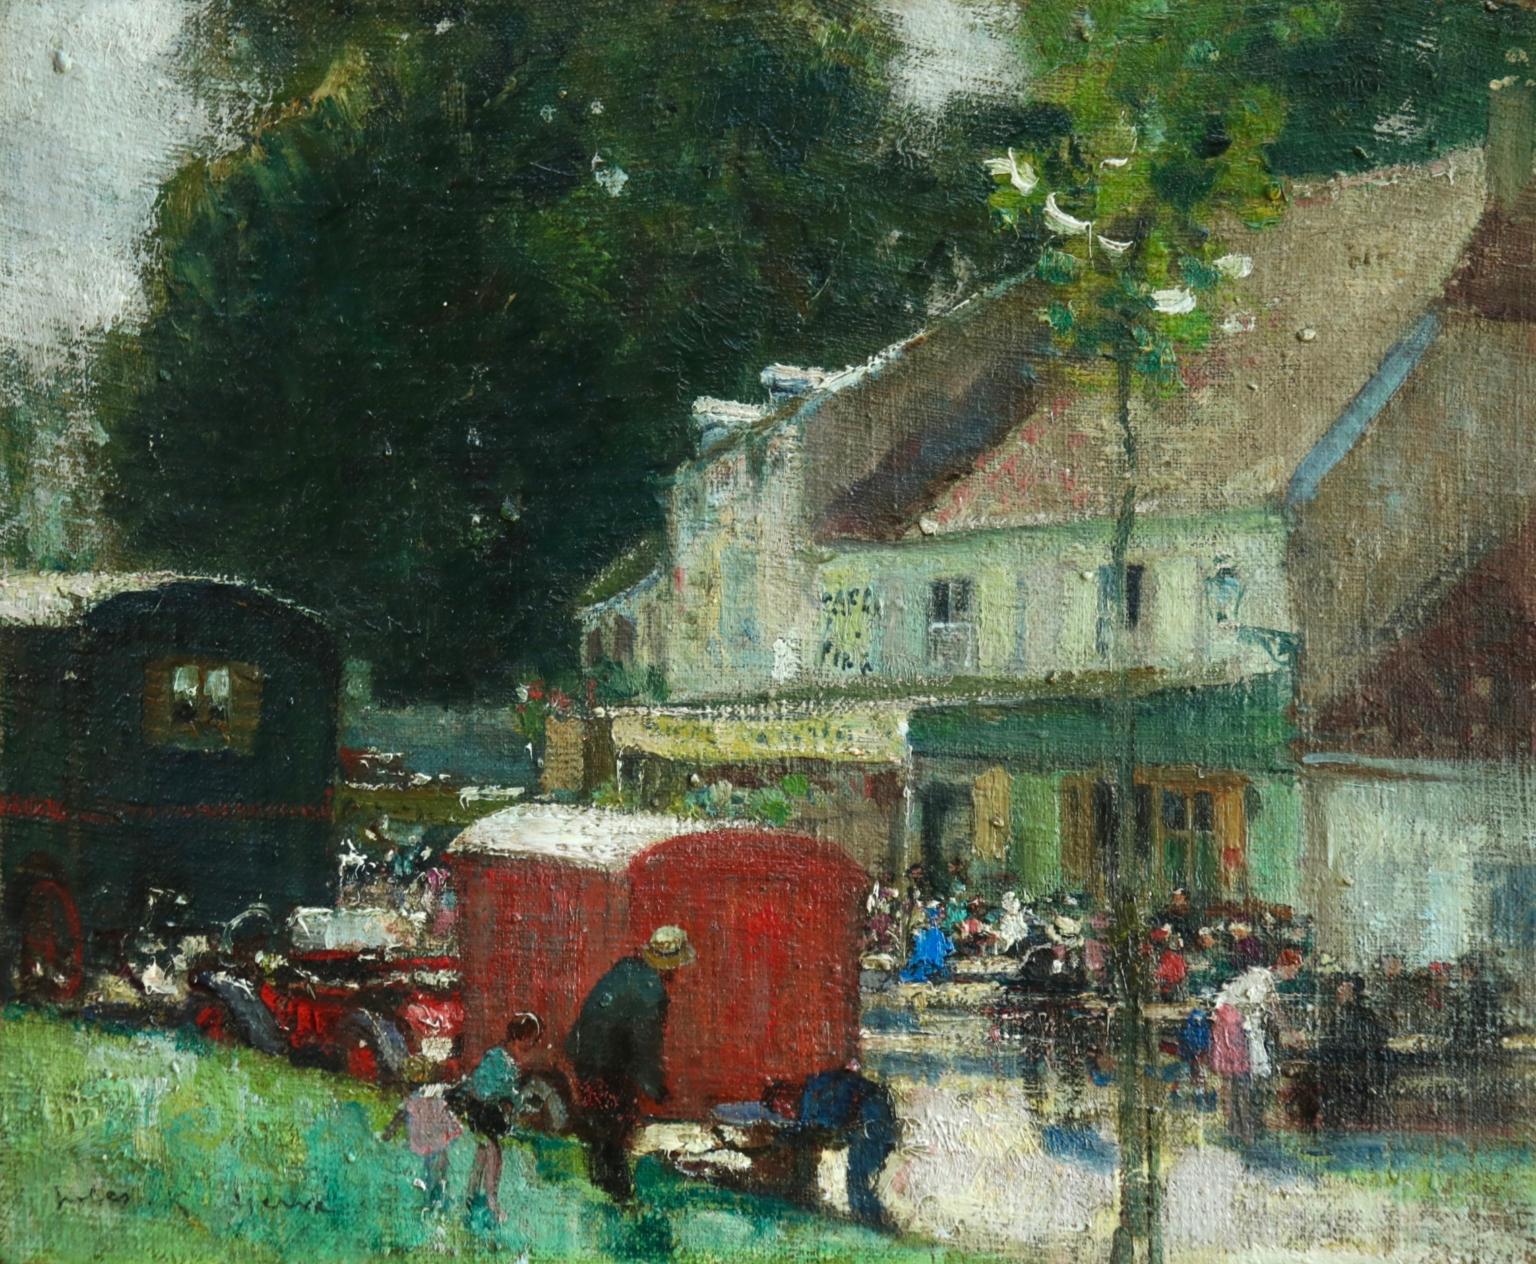 A Village Fair - Impressionist Oil, Figures in Landscape by Jules Rene Herve